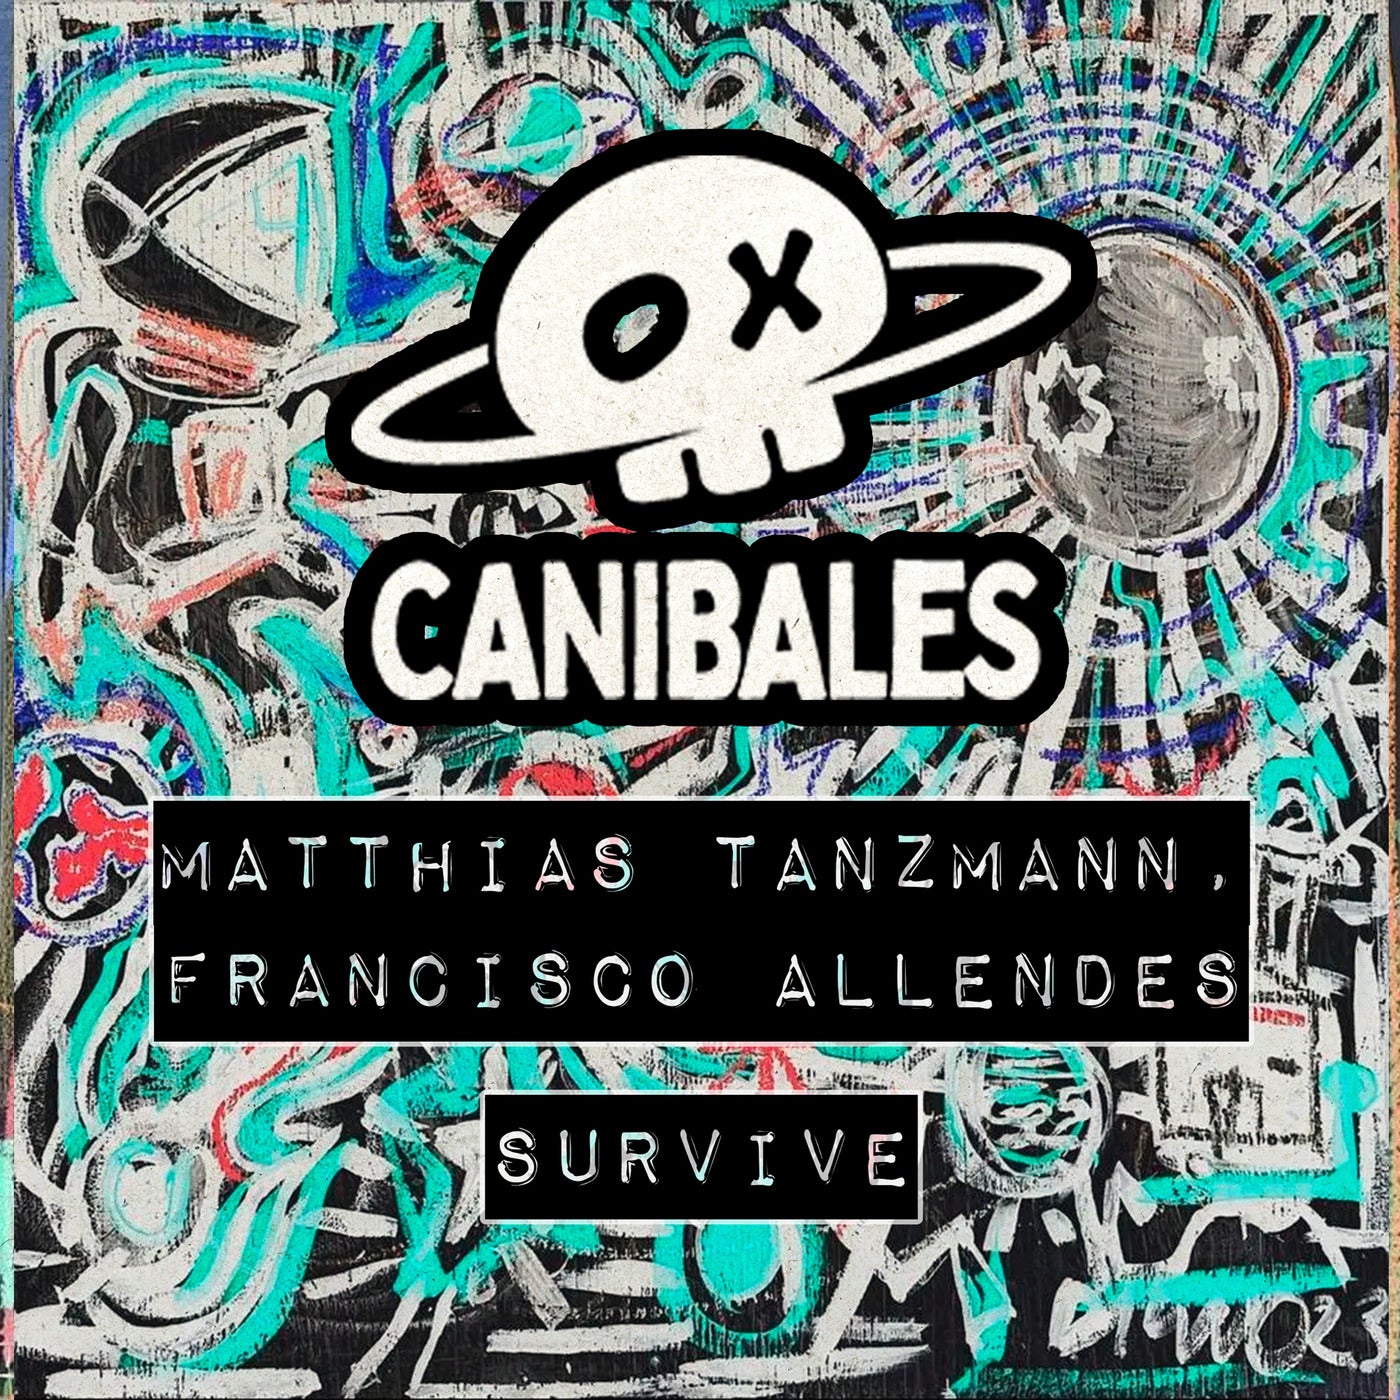 image cover: Matthias Tanzmann, Francisco Allendes - Survive - Extended Mix on CANIBALES